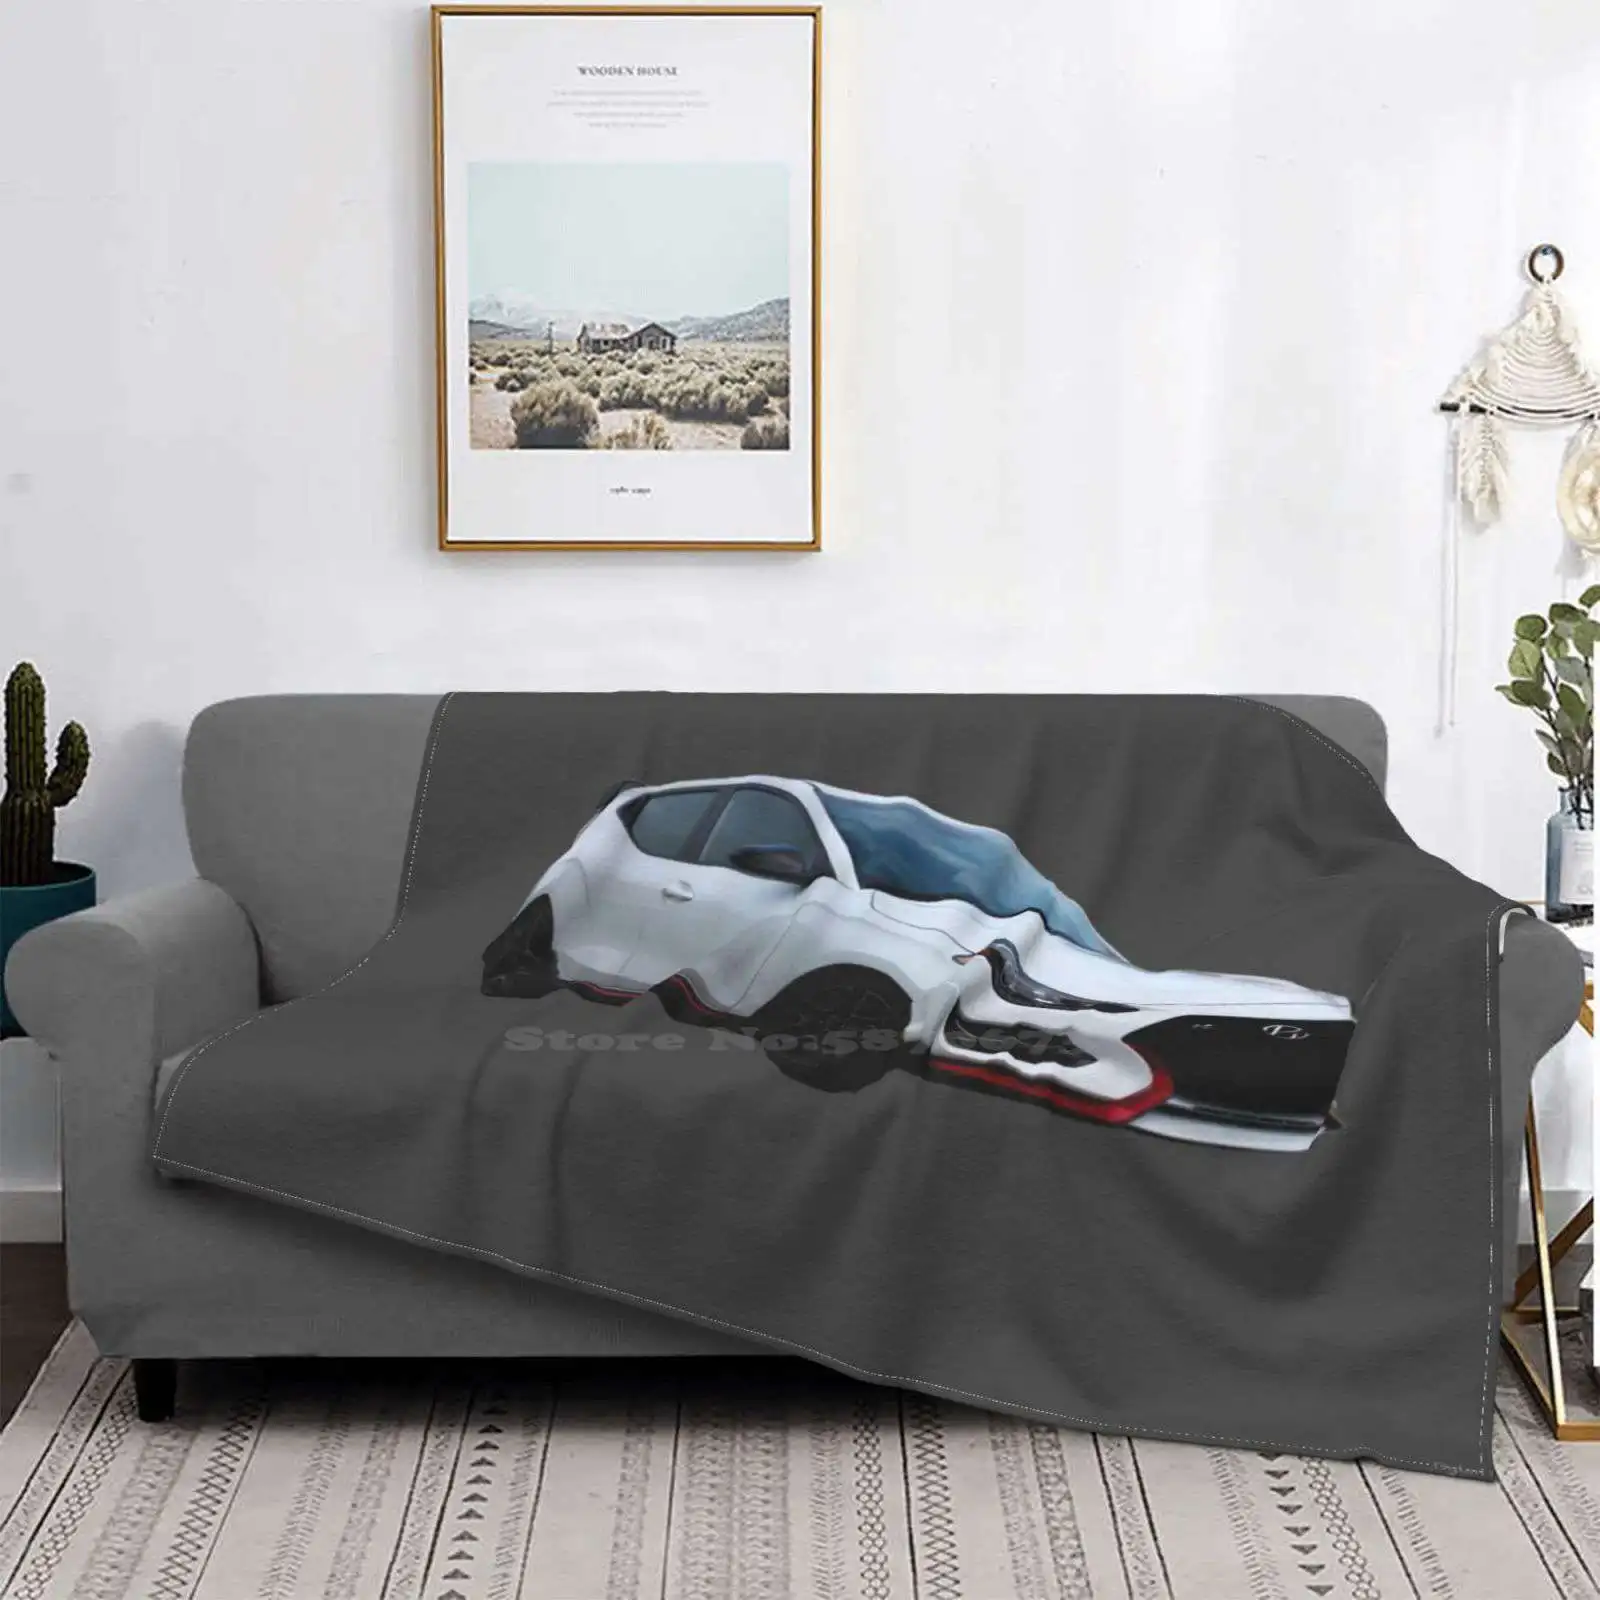 

Veloster-Manta portátil de viaje para el hogar, recorte para sofá cama, Camping, coche, avión, Veloster, Hyundai, coche, blanco